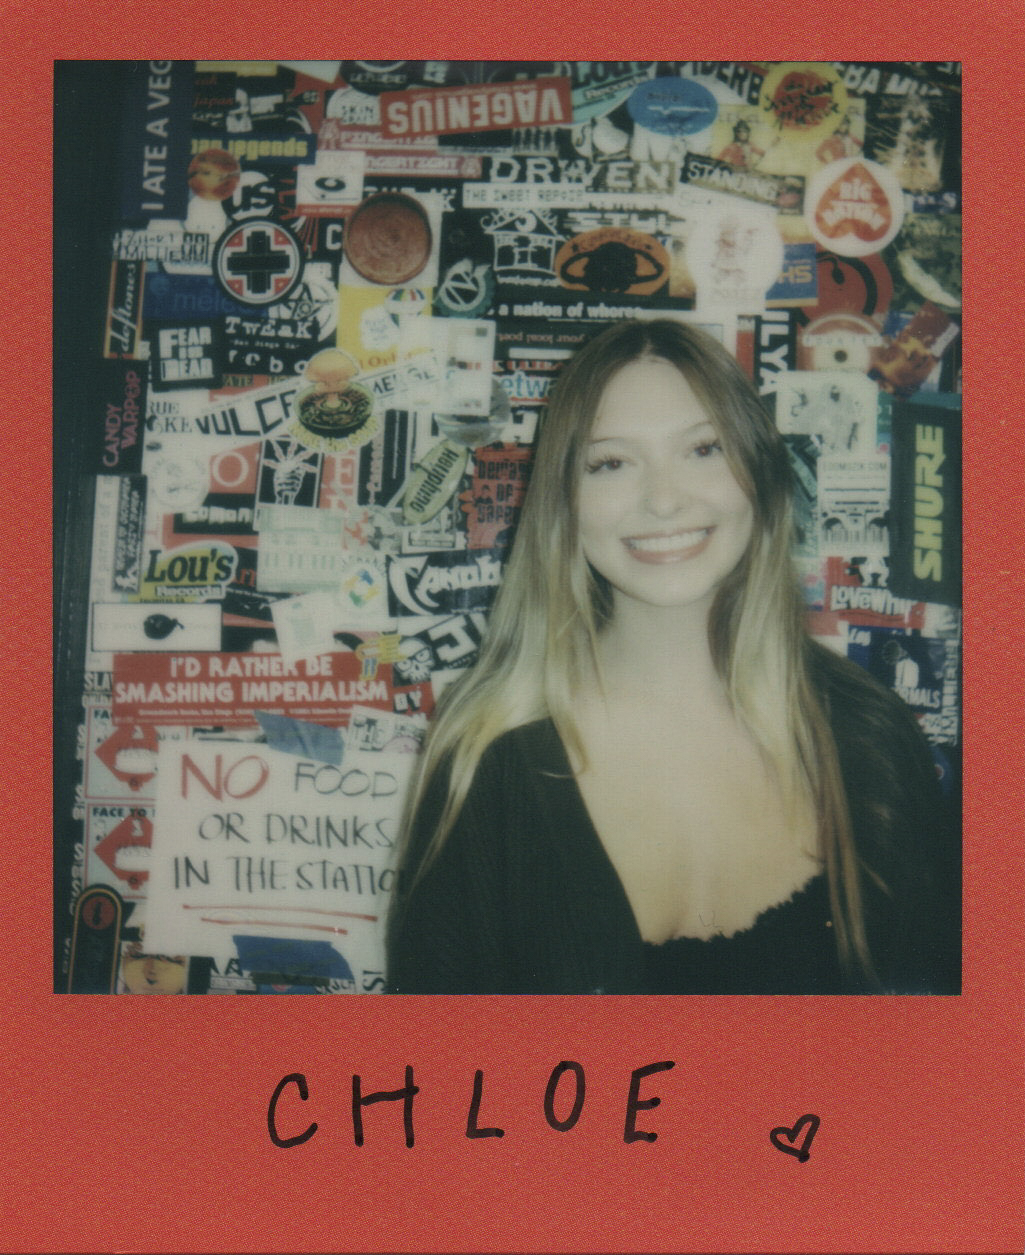 Chloe